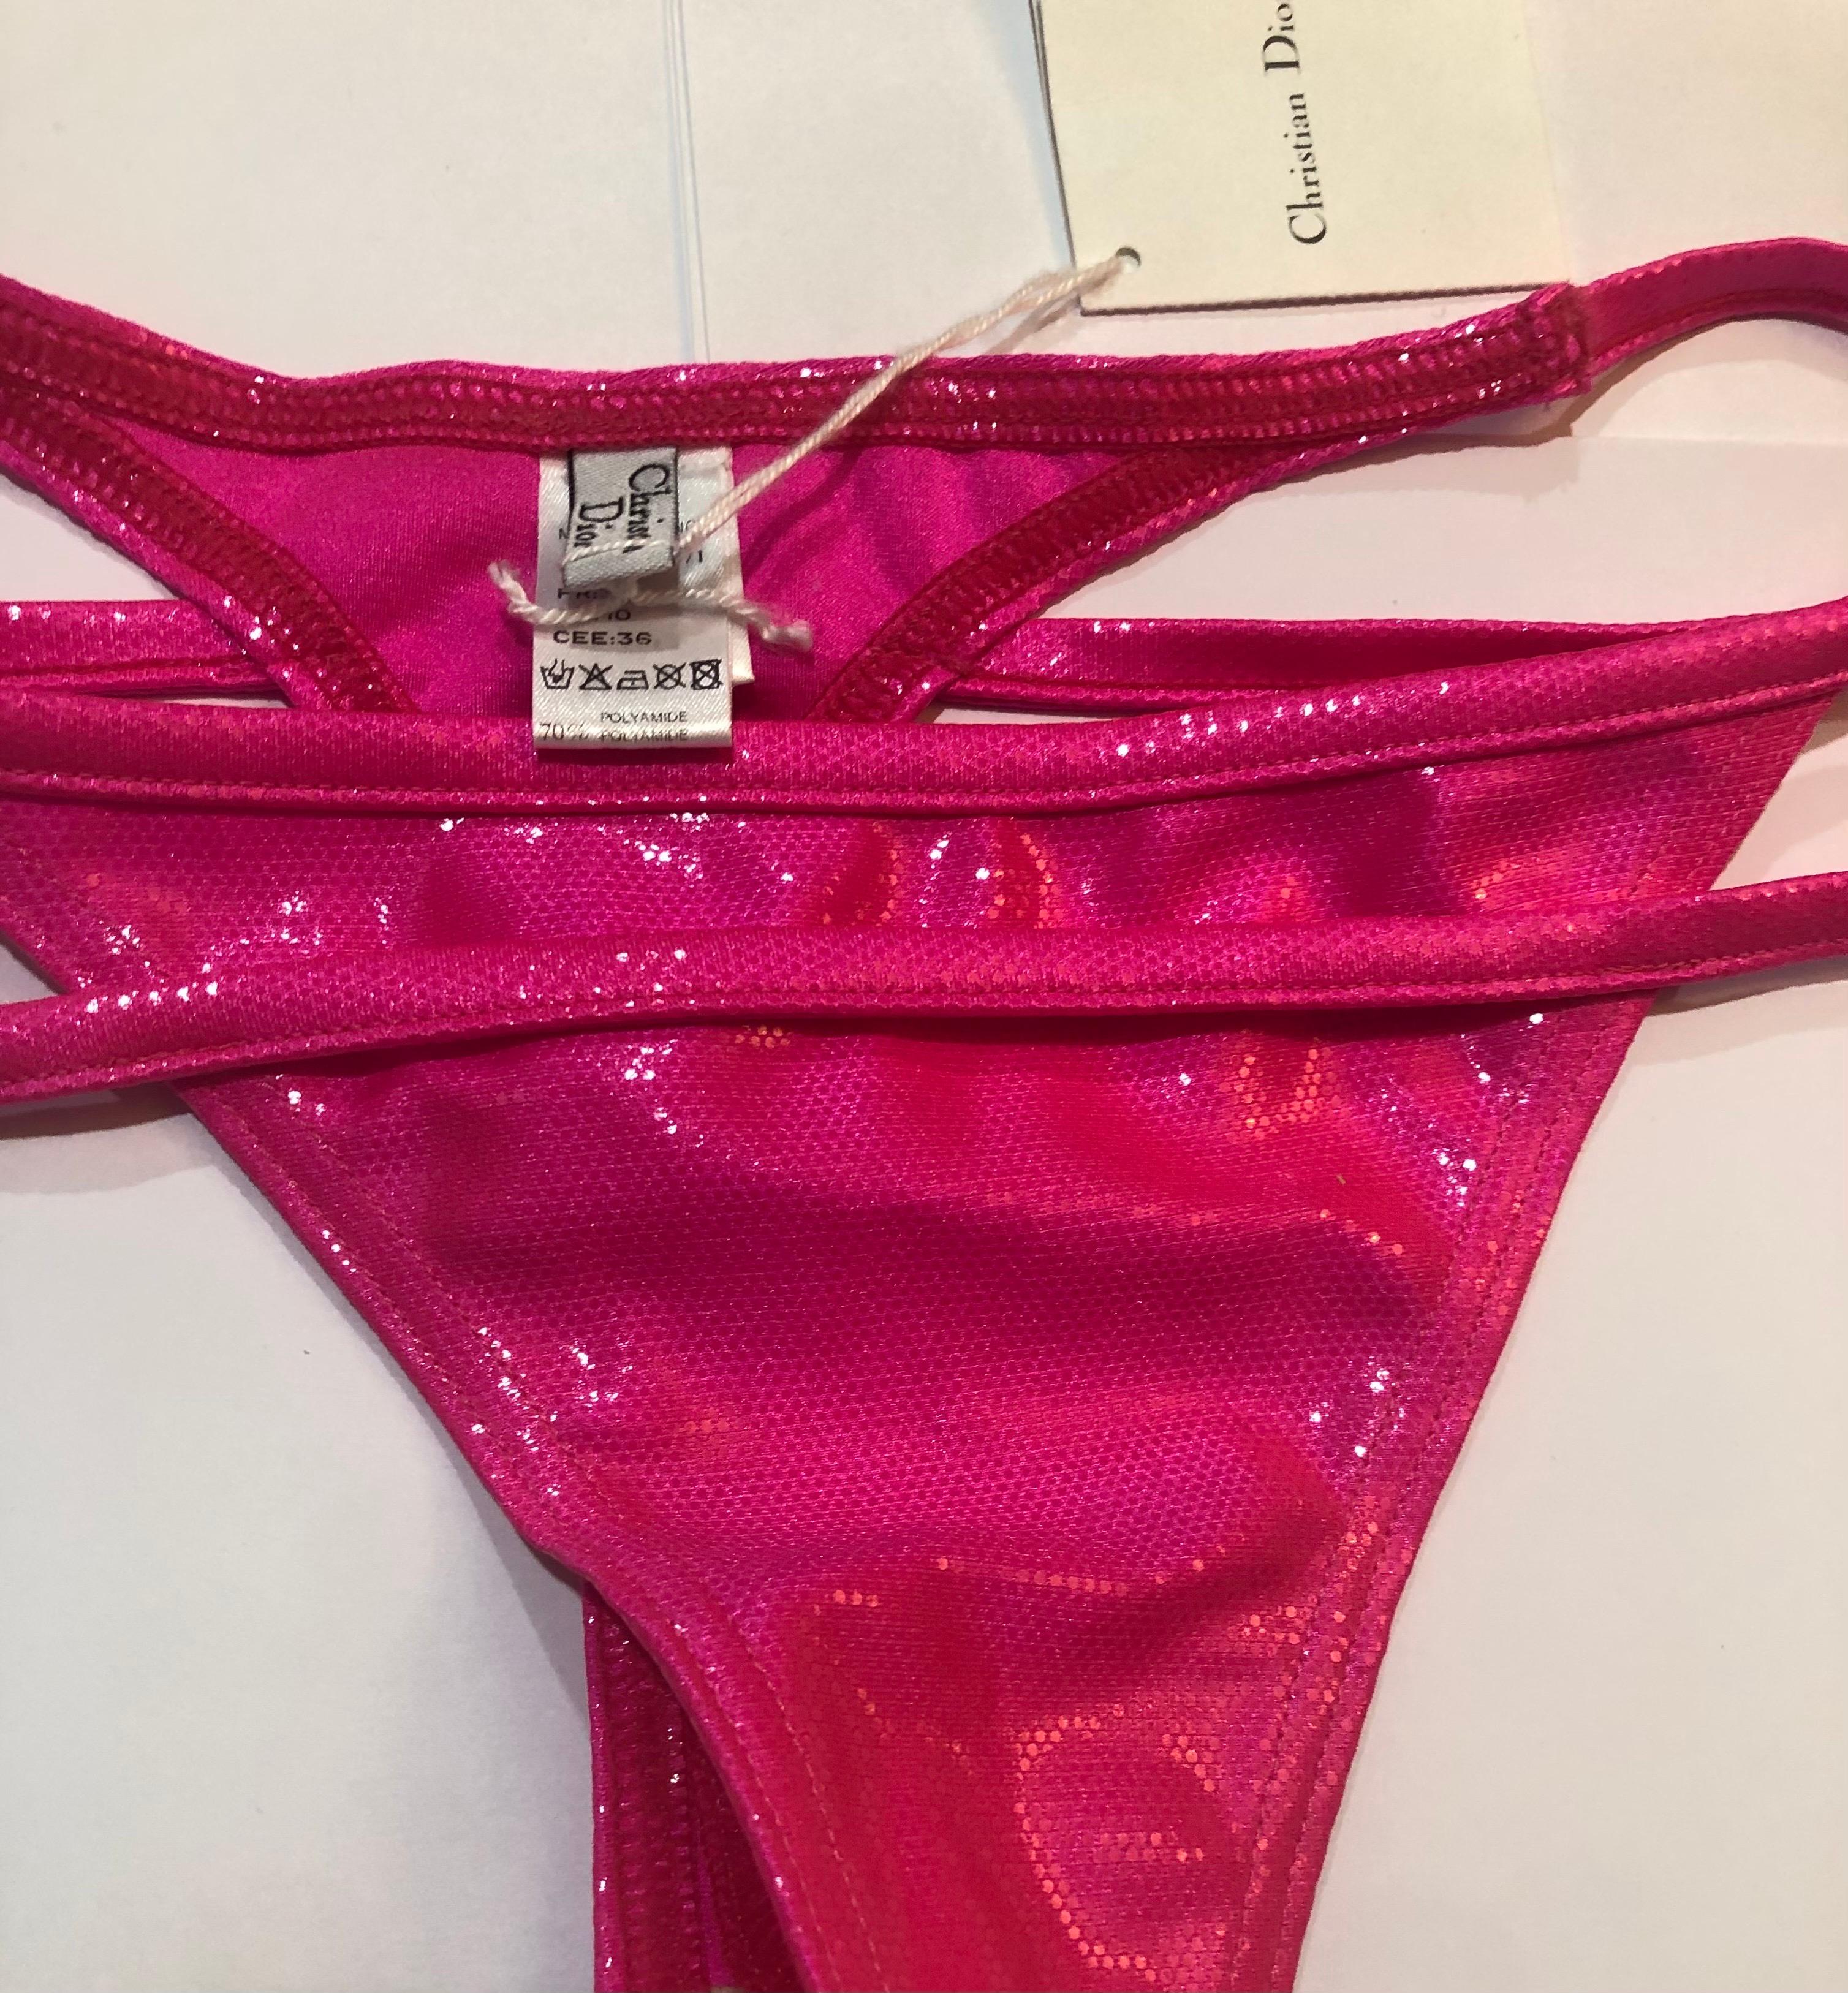 Women's Iconic Vintage Christian Dior Pink Bikini Swimsuit by John Galliano 2003 Runway